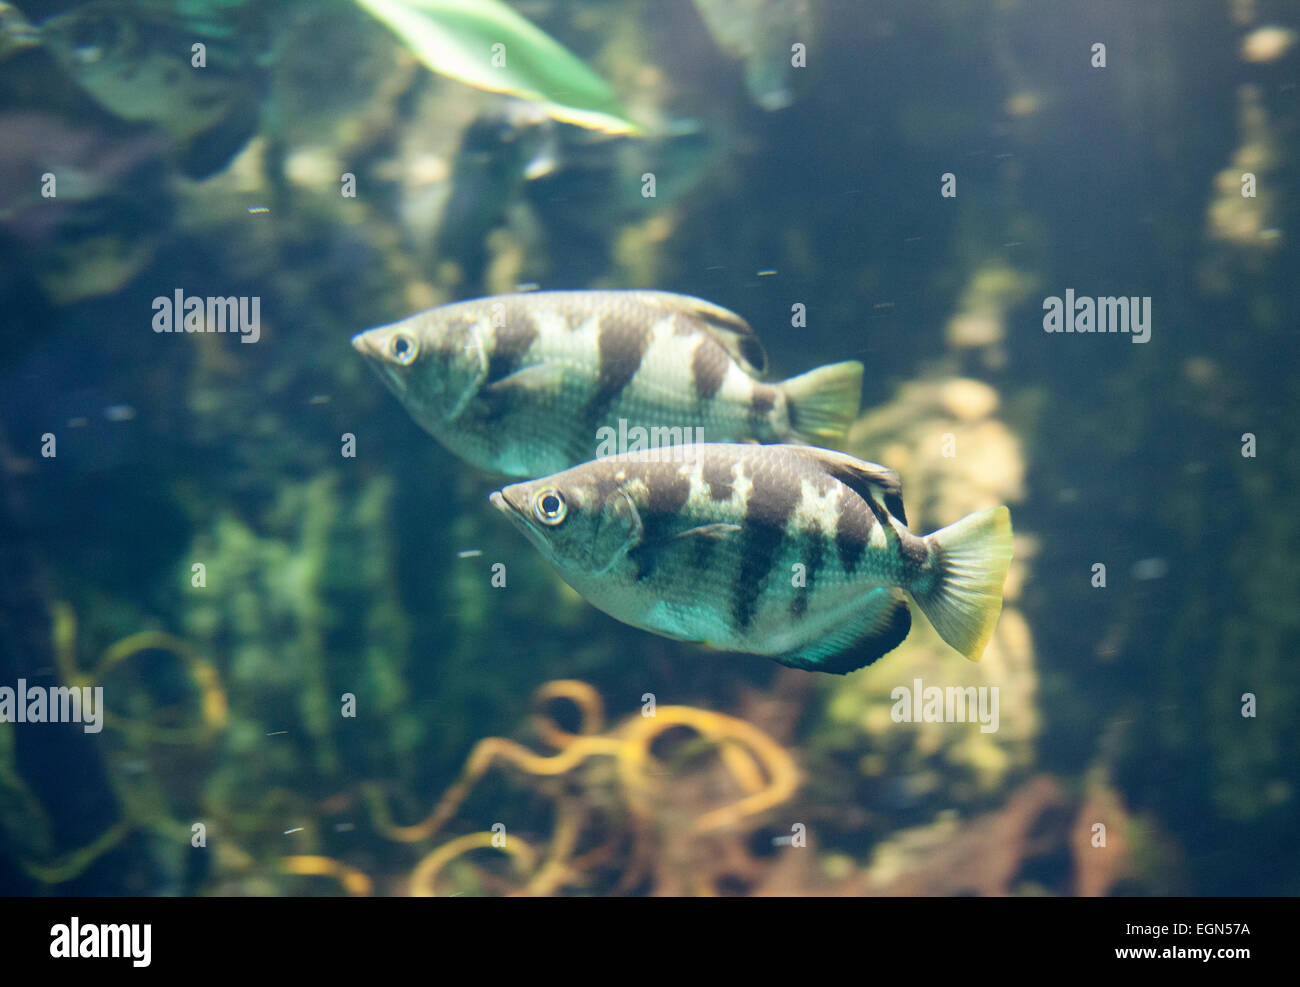 Angler fish swimming in motion underwater Stock Photo